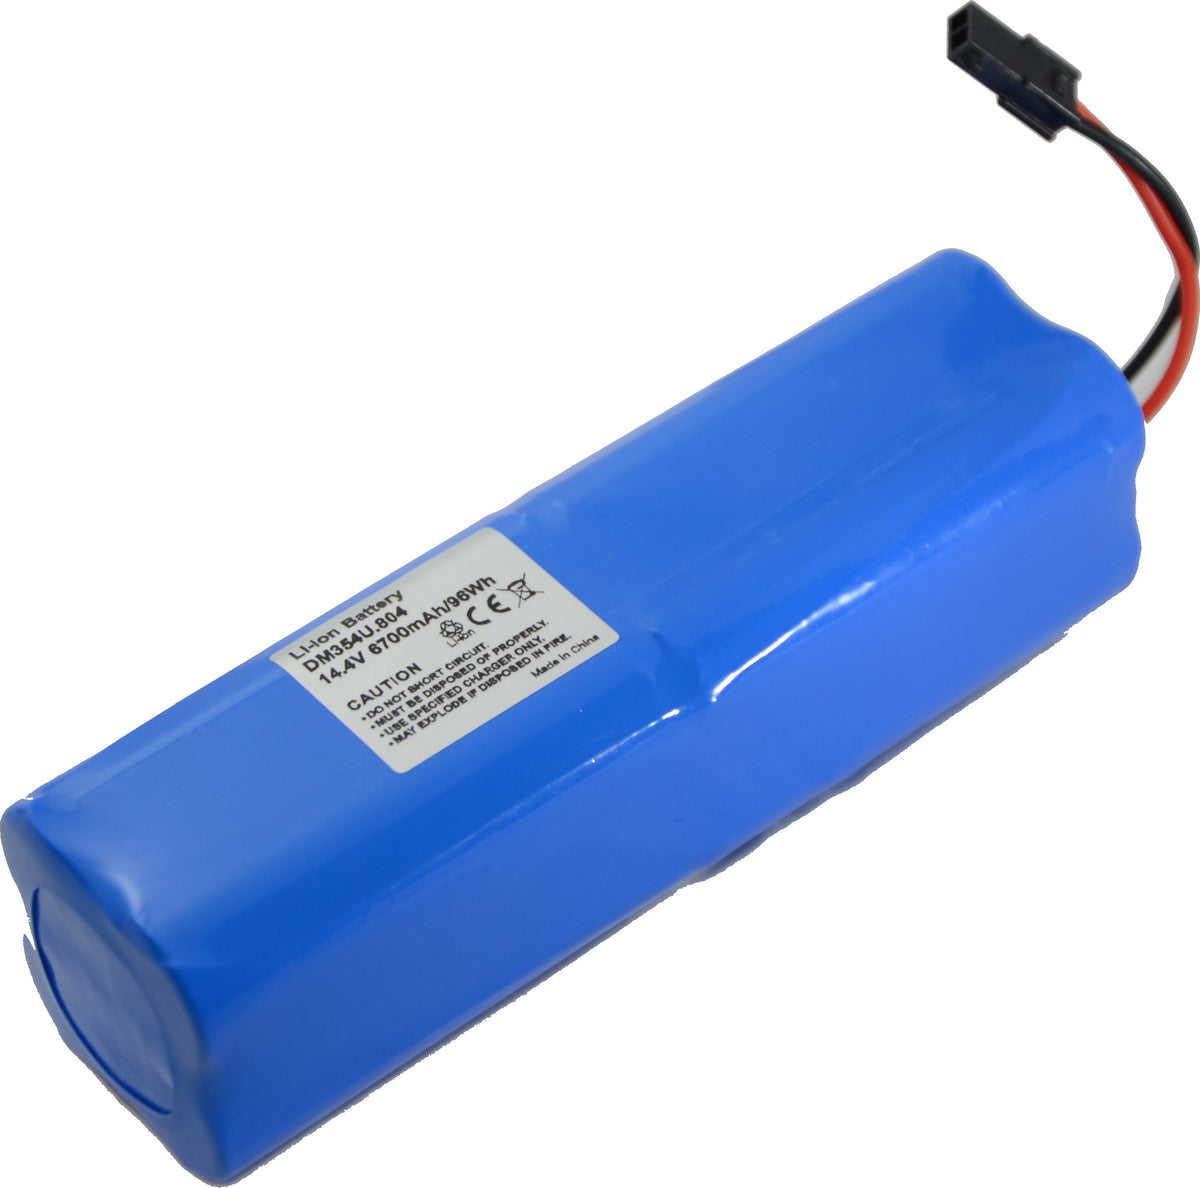 Lithium Battery – Salt Blue